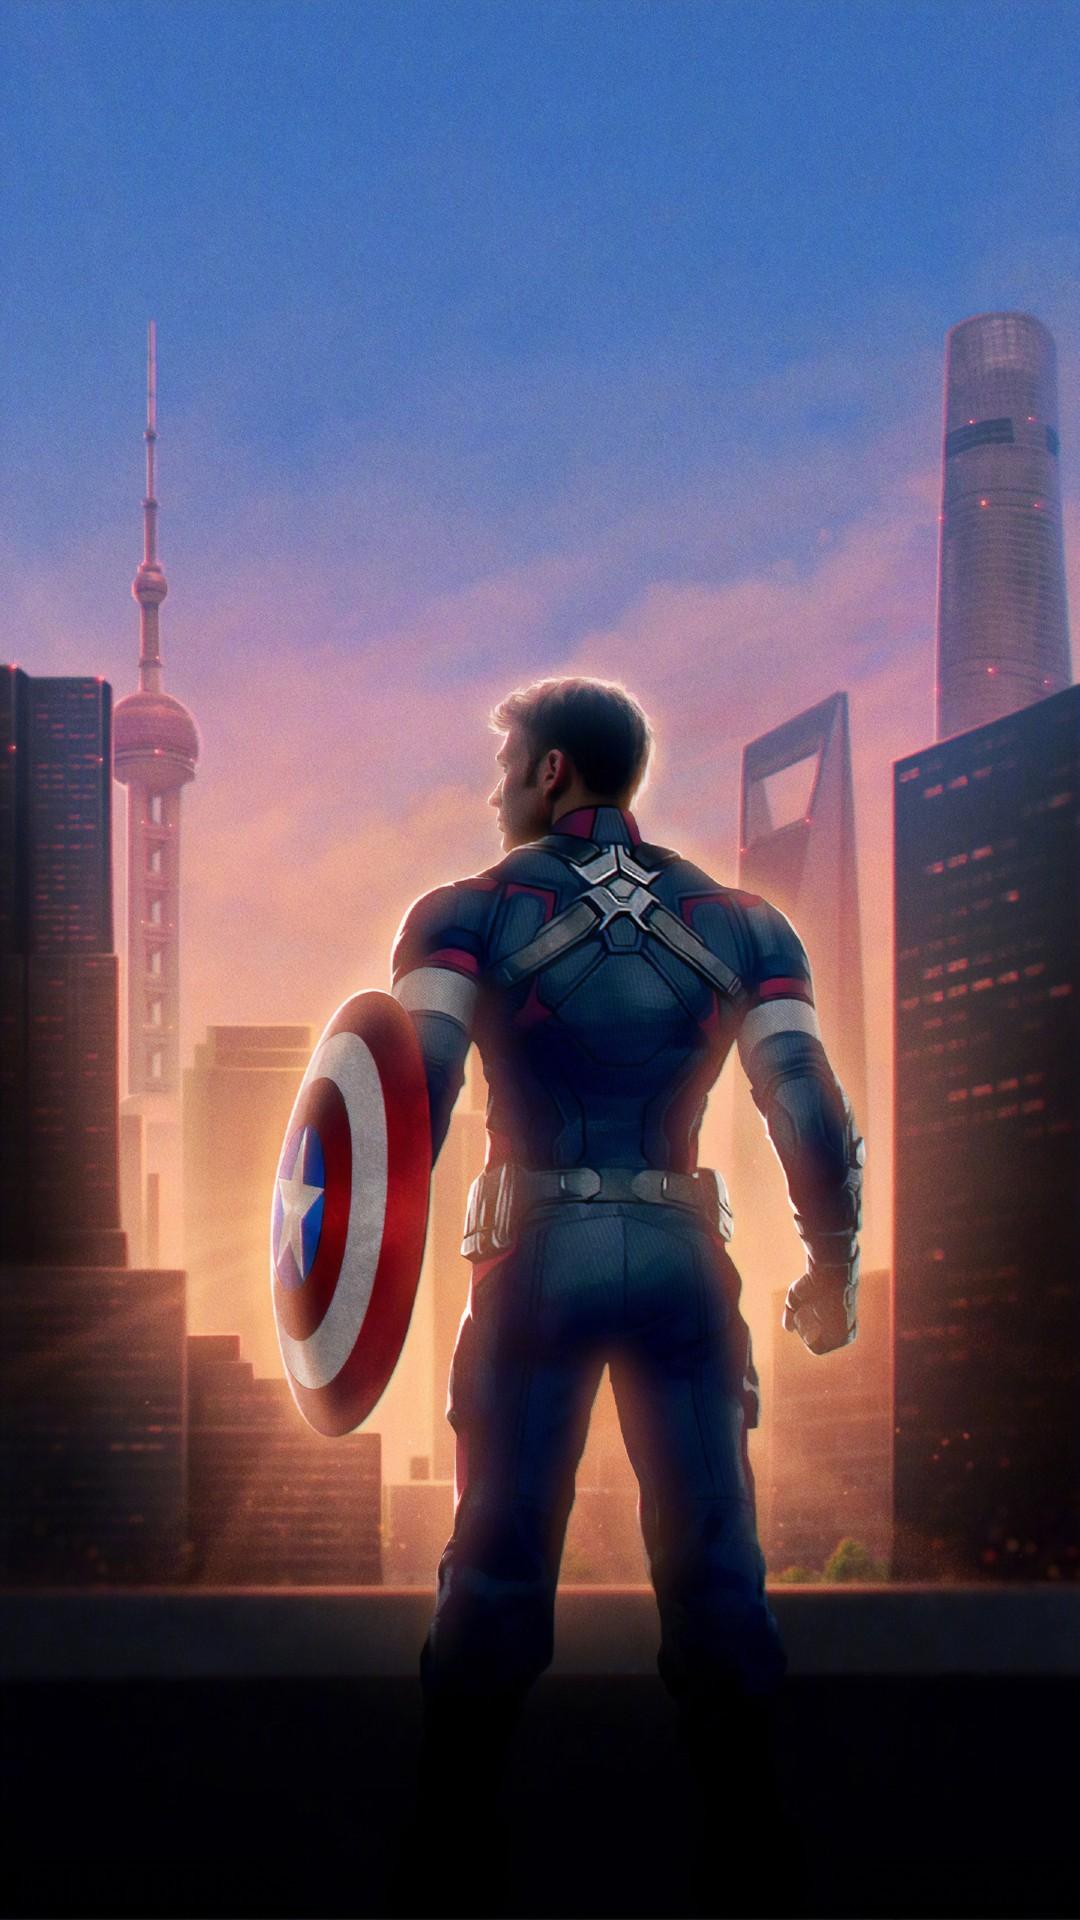 Captain America Avengers Endgame Wallpapers For iPhone